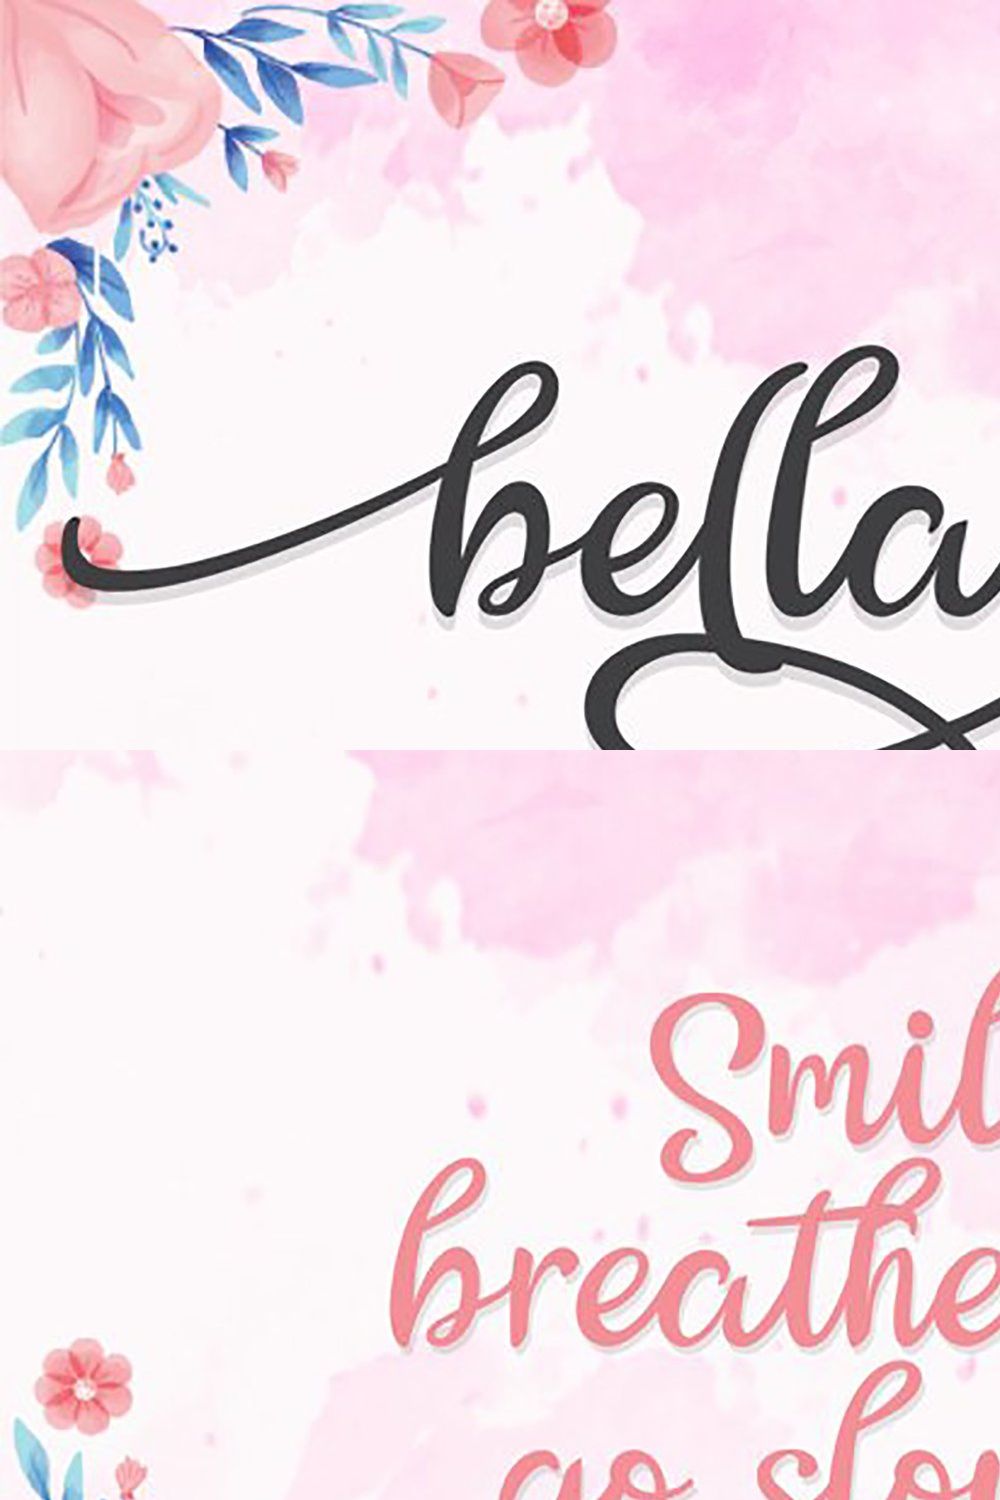 Bellasya | a handwriten font pinterest preview image.